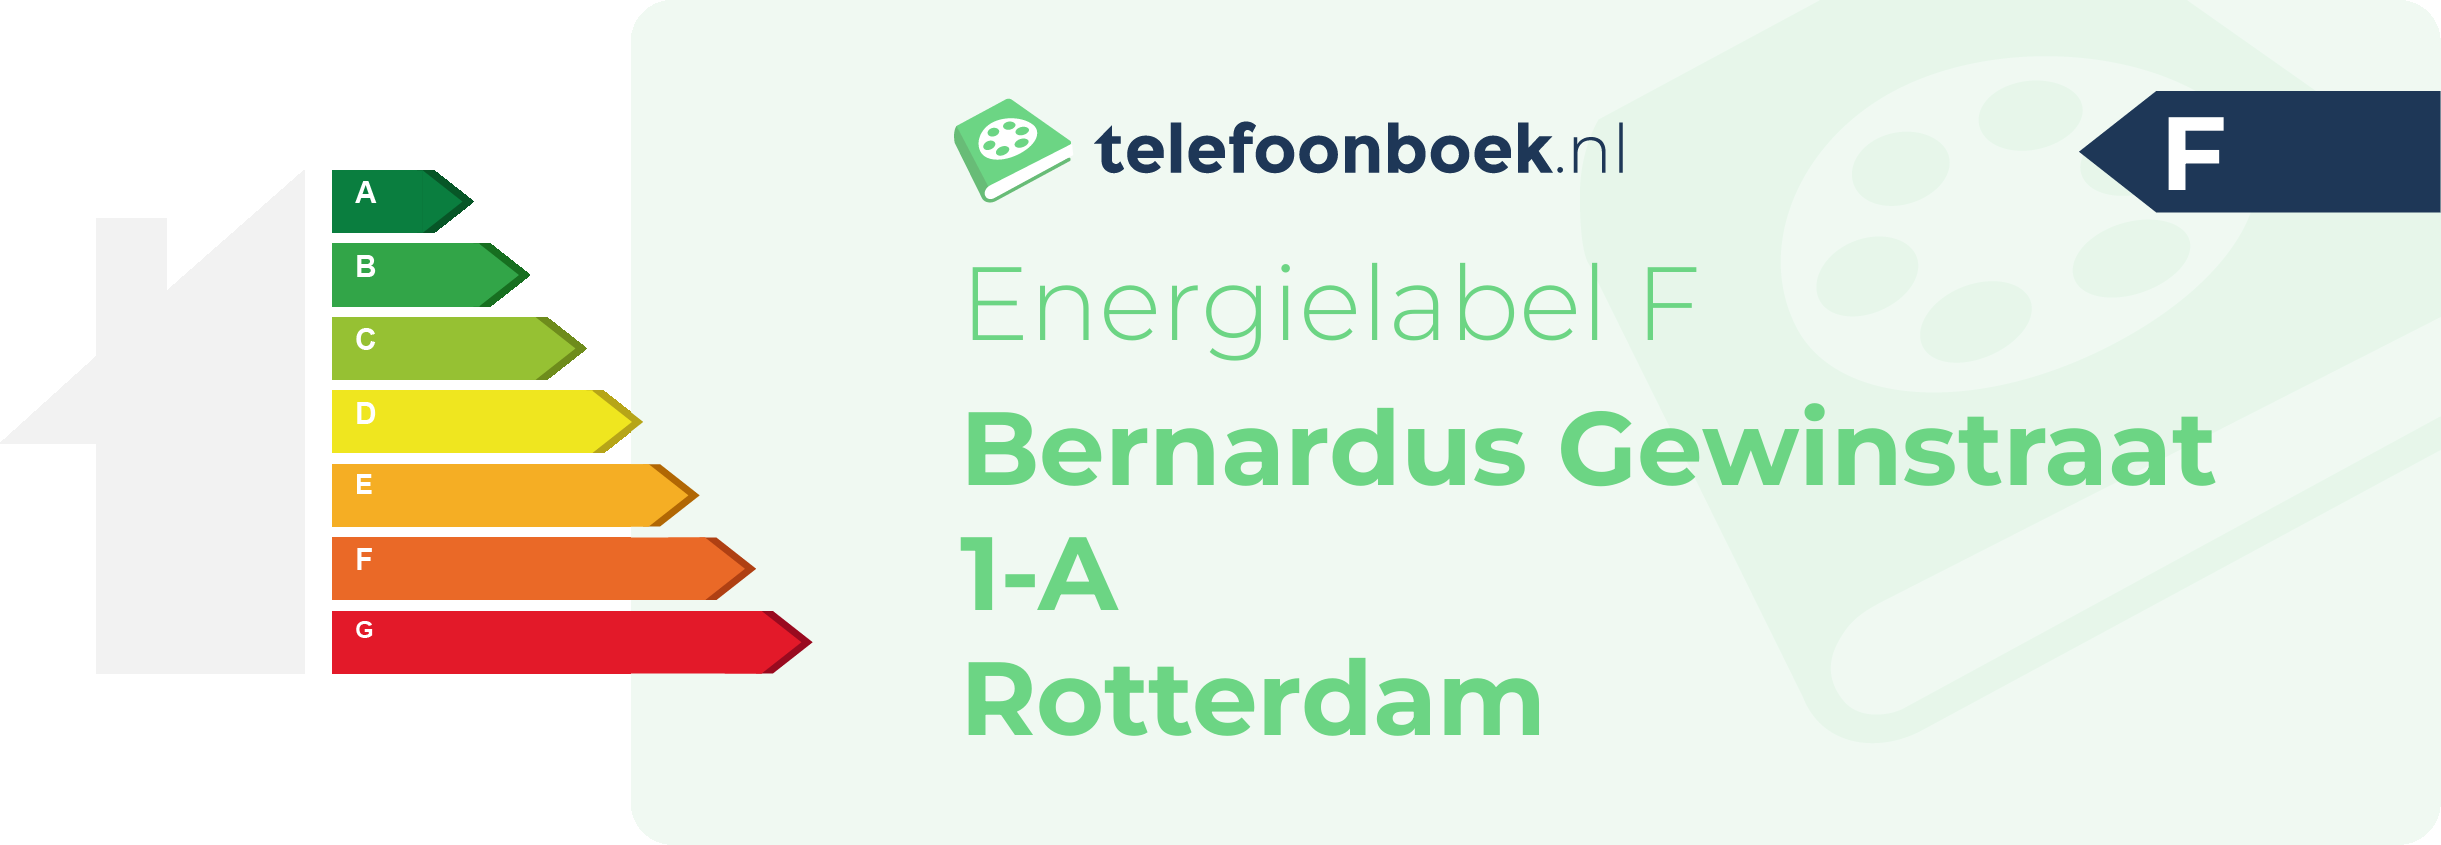 Energielabel Bernardus Gewinstraat 1-A Rotterdam